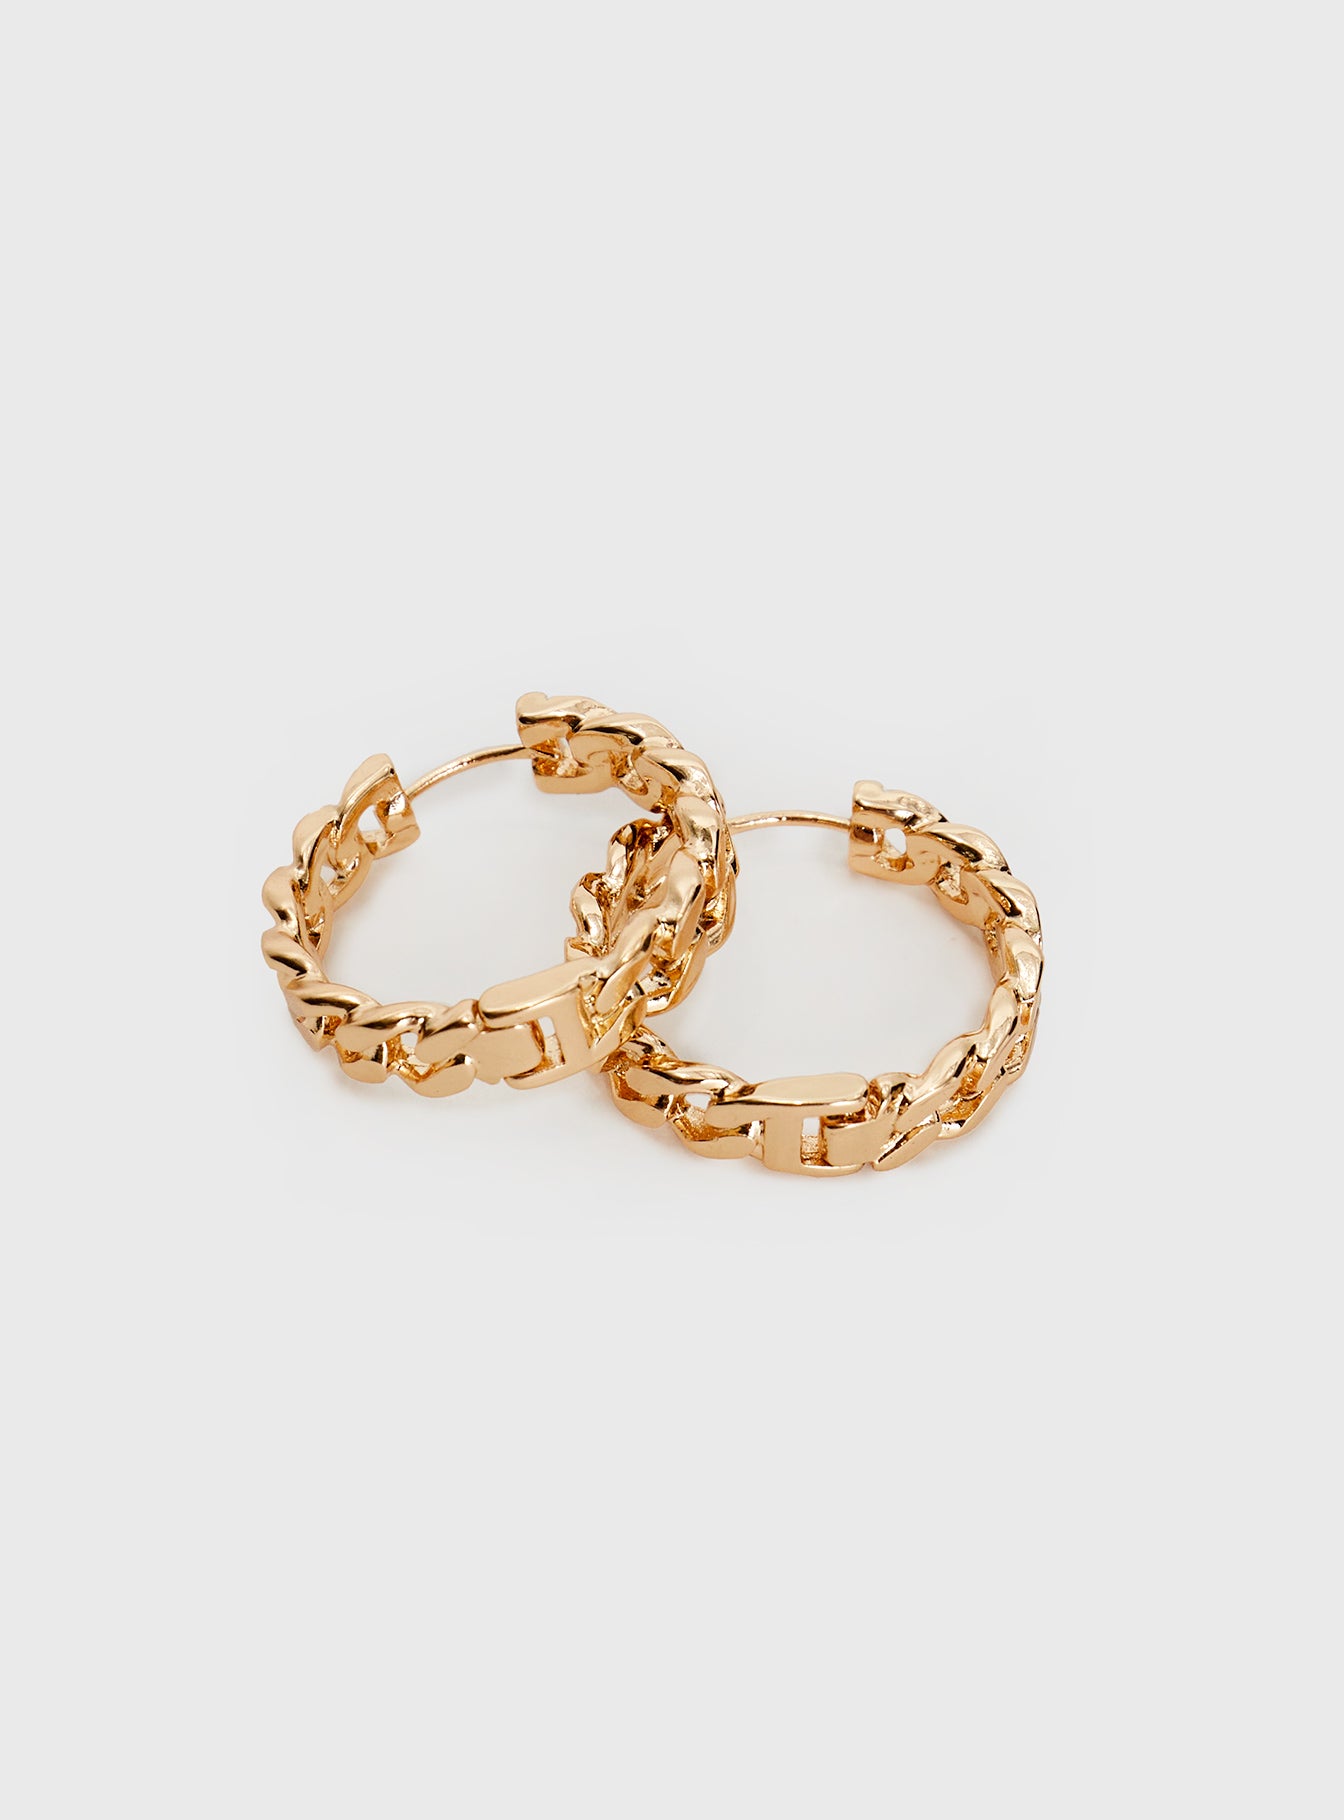 Mens Gold Earrings Mens Earrings Studs 3mm Stud Earrings Men Mens Earrings  Minimalist Simple Gold Earrings for Men Mens Jewelry - Etsy